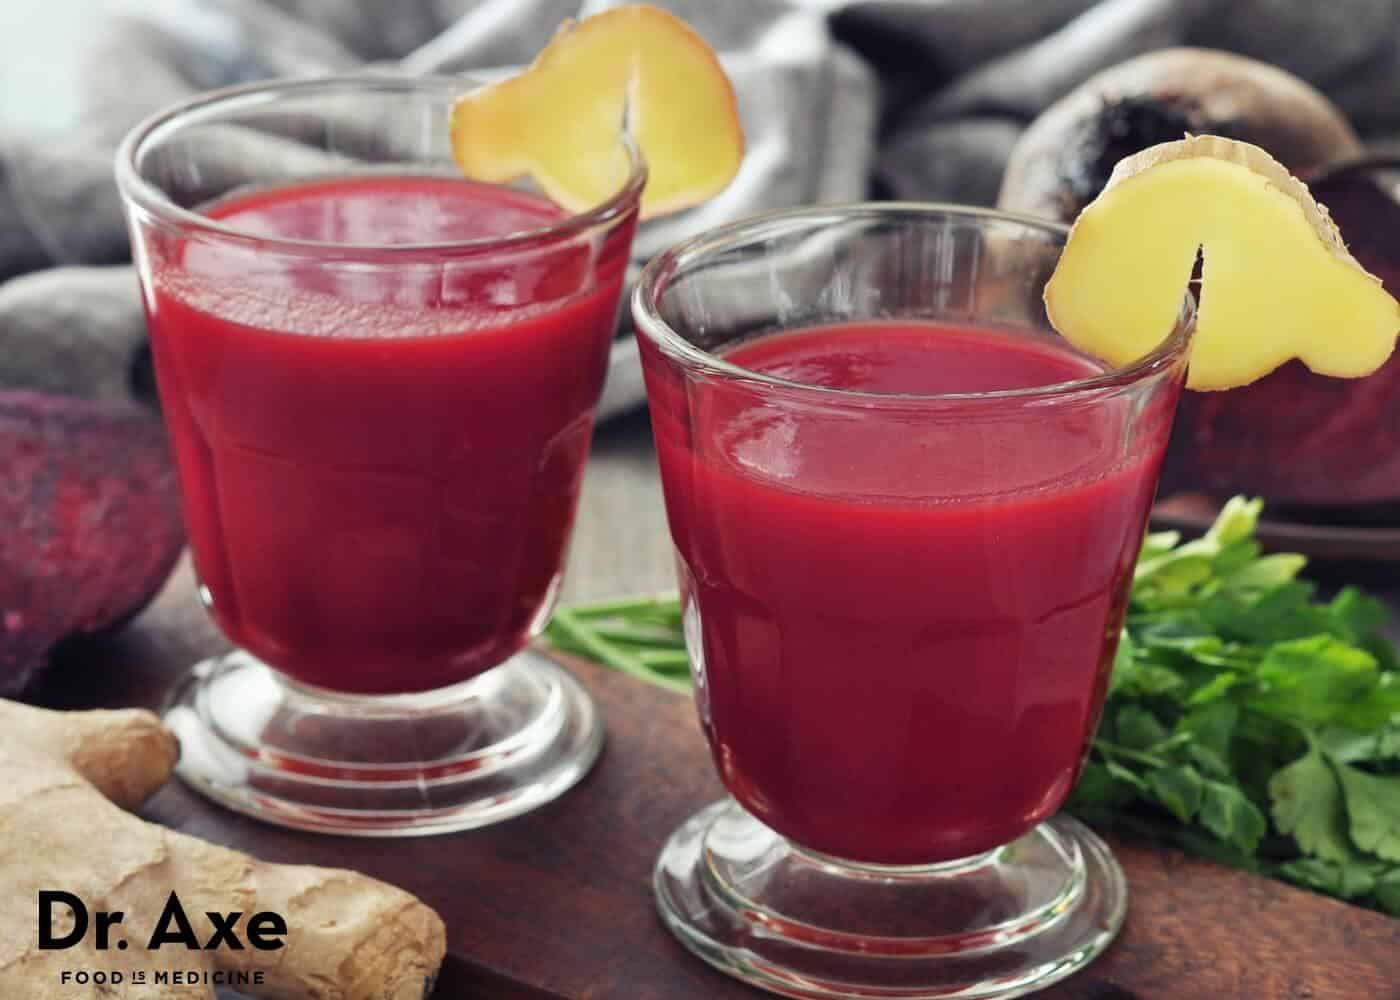 Liver detox juice recipe - Dr. Axe